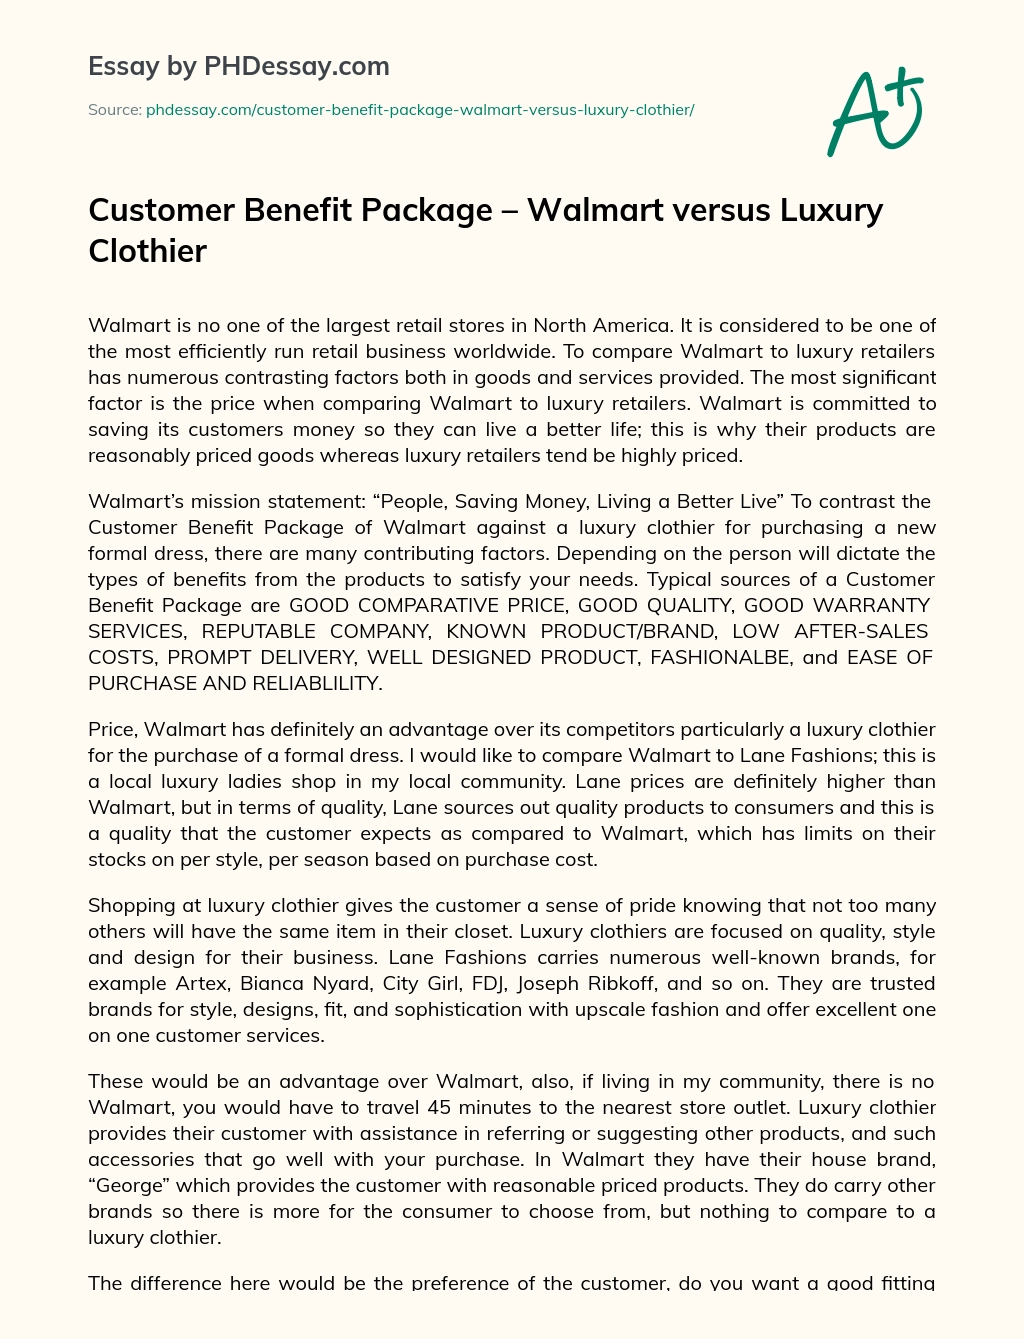 Customer Benefit Package – Walmart versus Luxury Clothier essay